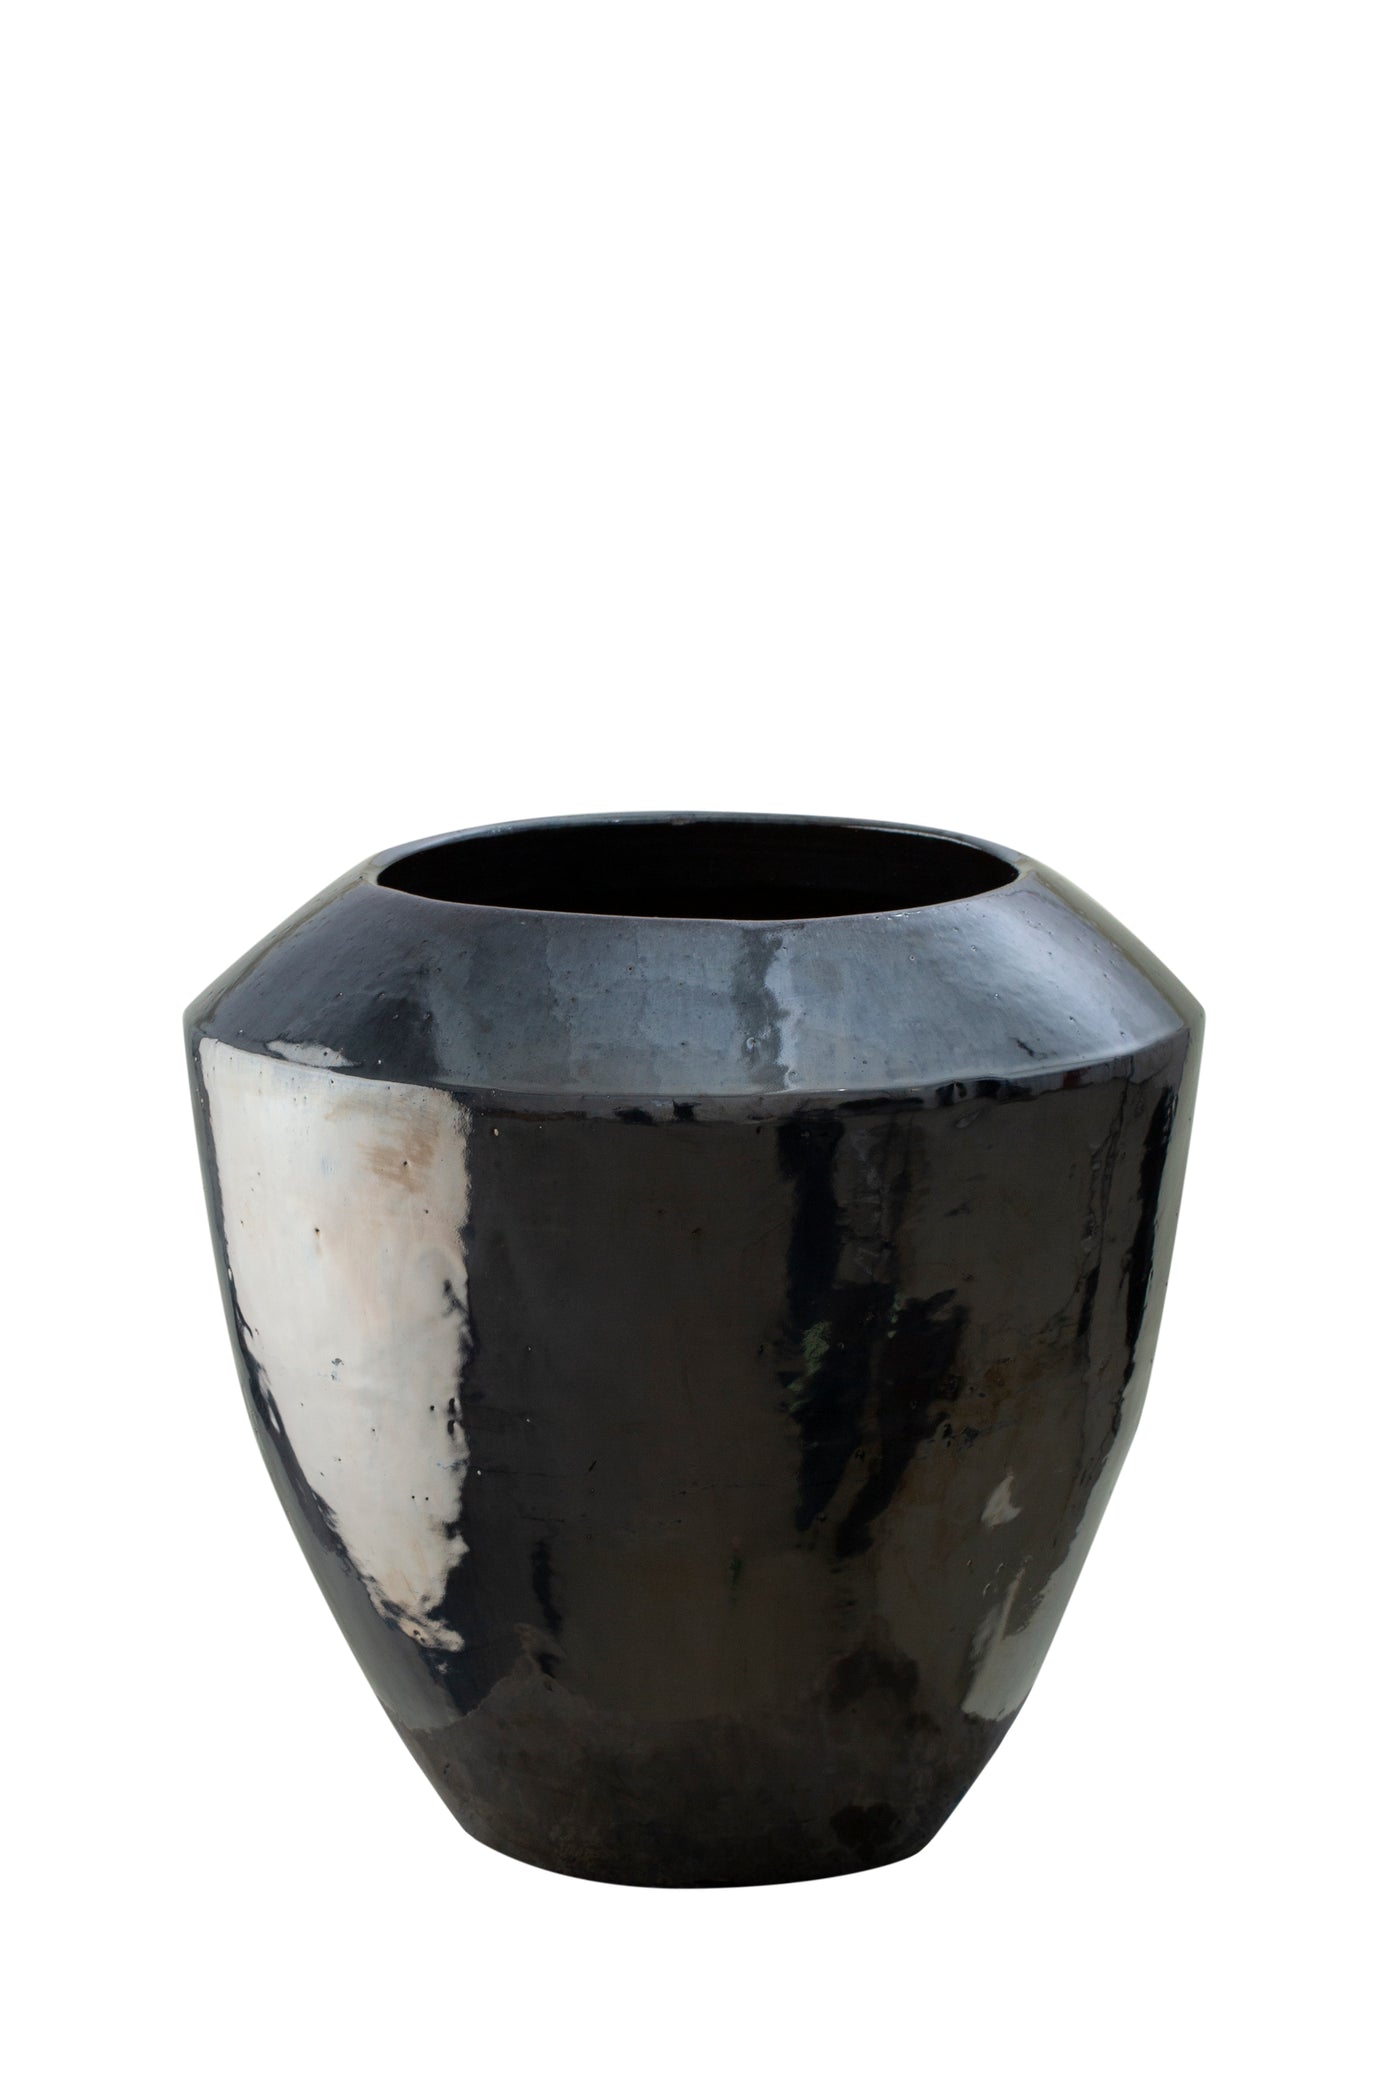 Ghiveci plante D50xH50cm ceramic Coppa Metal, metal glaze